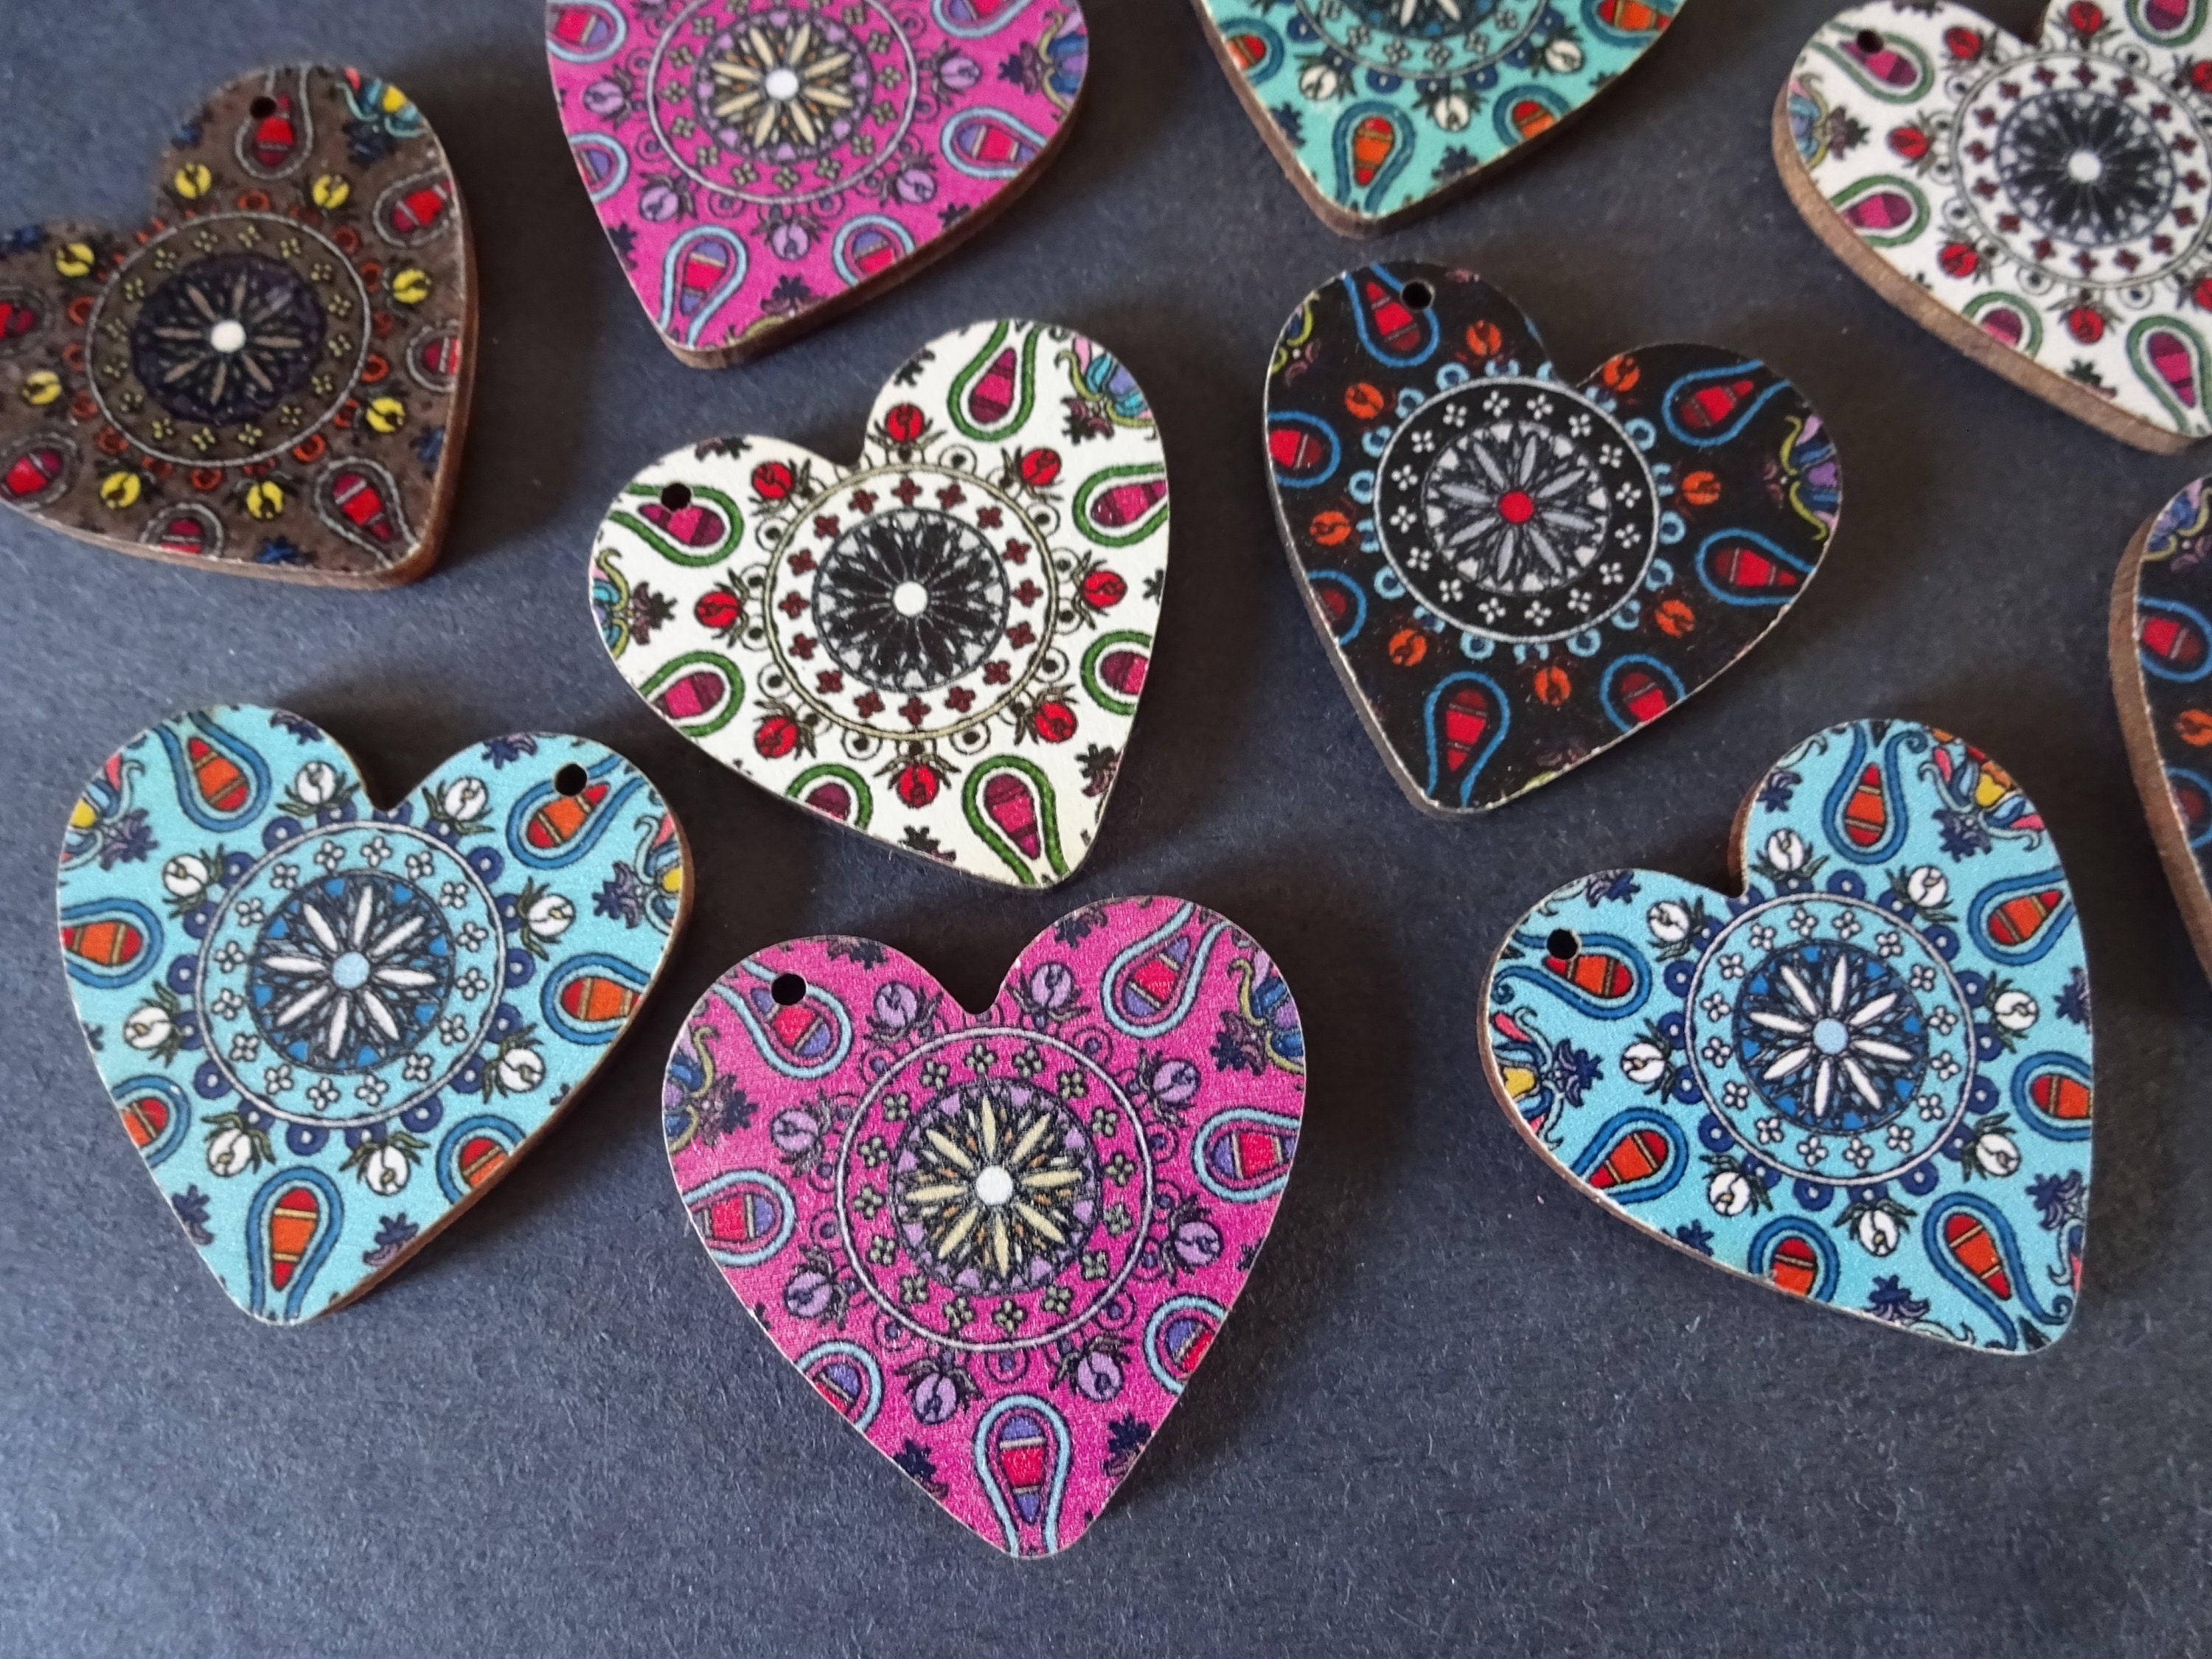 Wood Hearts. Wooden Heart Decor with Rainbow Colors. Rainbow Hearts